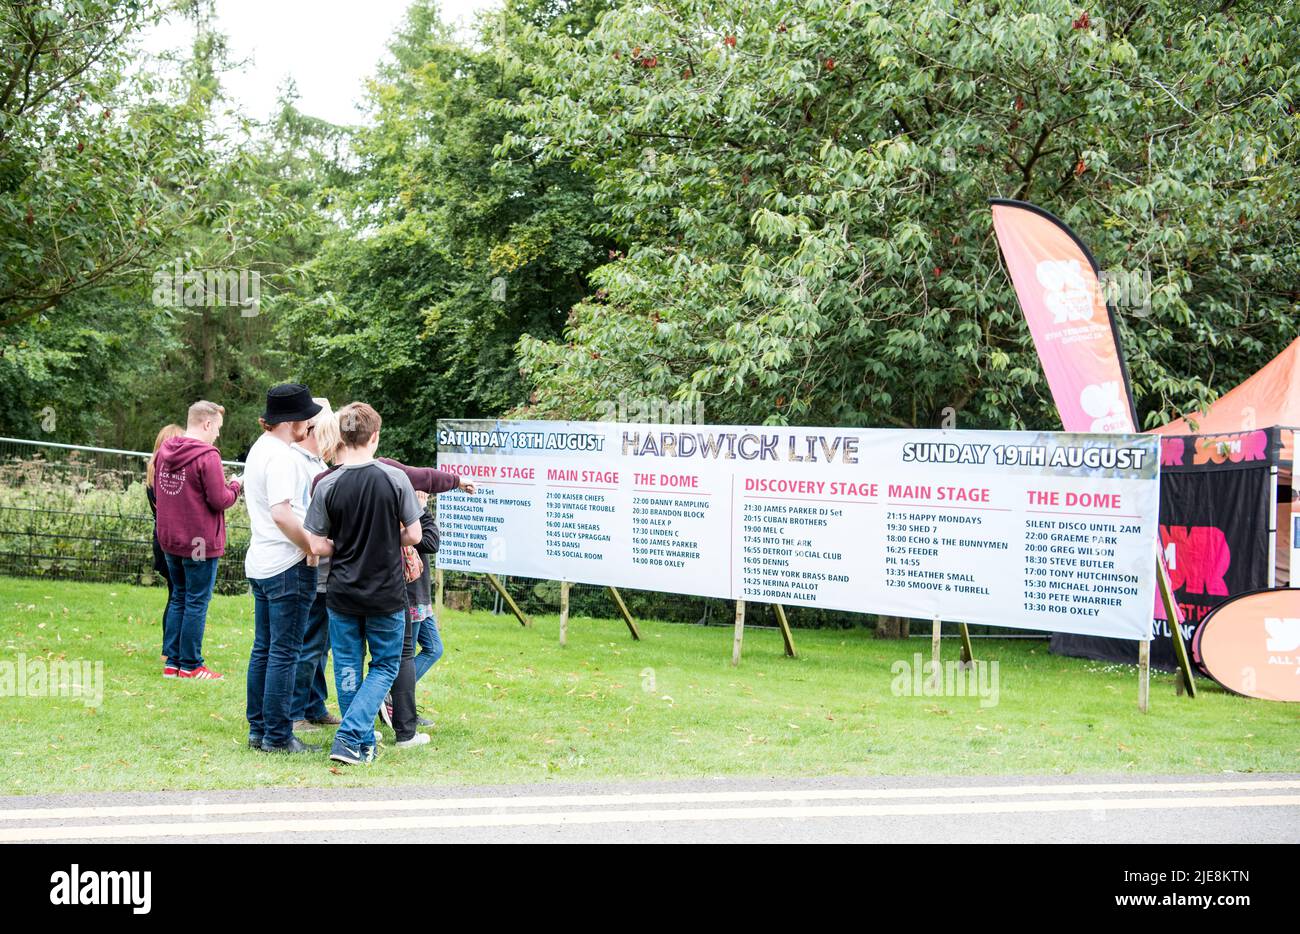 Hardwick Live Festival, Sedgefield, County Durham, Großbritannien Samstag, 18. August 2018. Festivalkredit: Tracy Daniel/Alamy Stockfoto